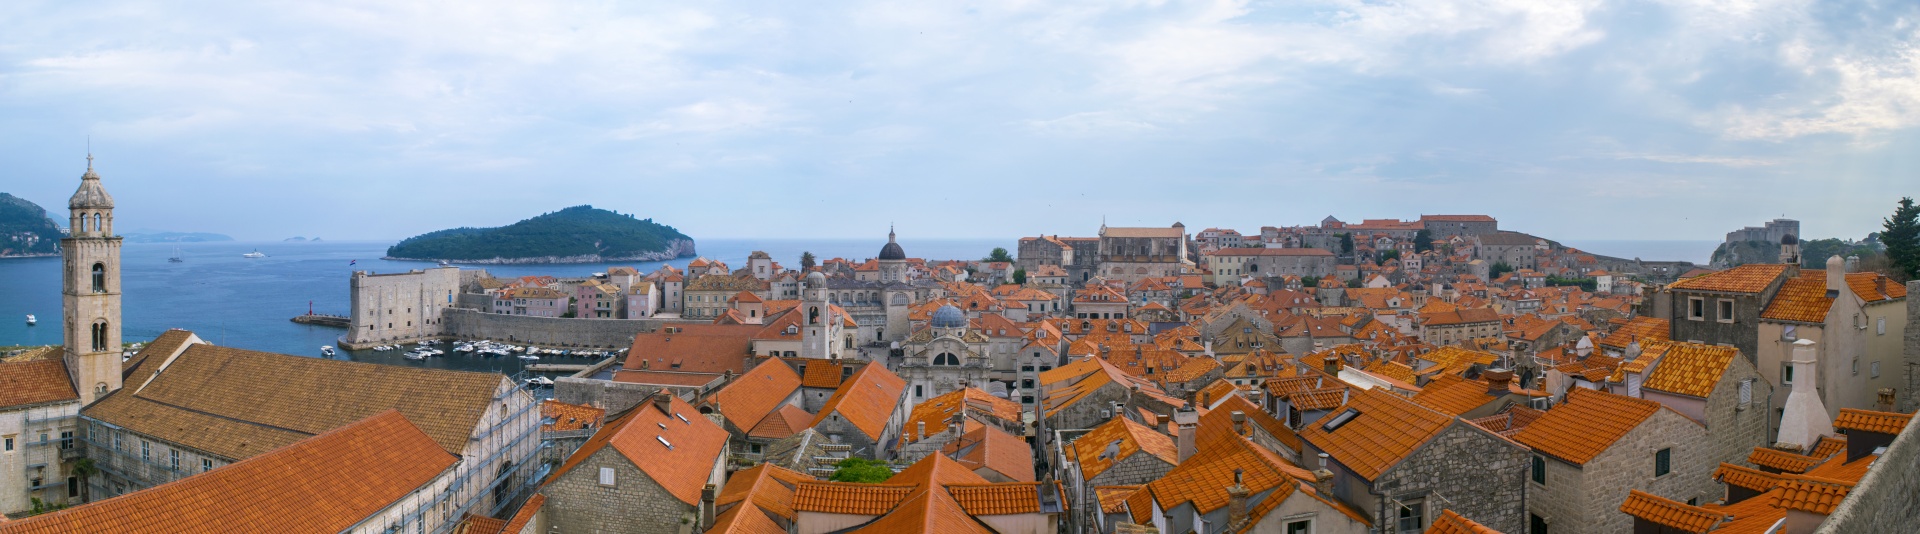 Dubrovnik Panorama 431